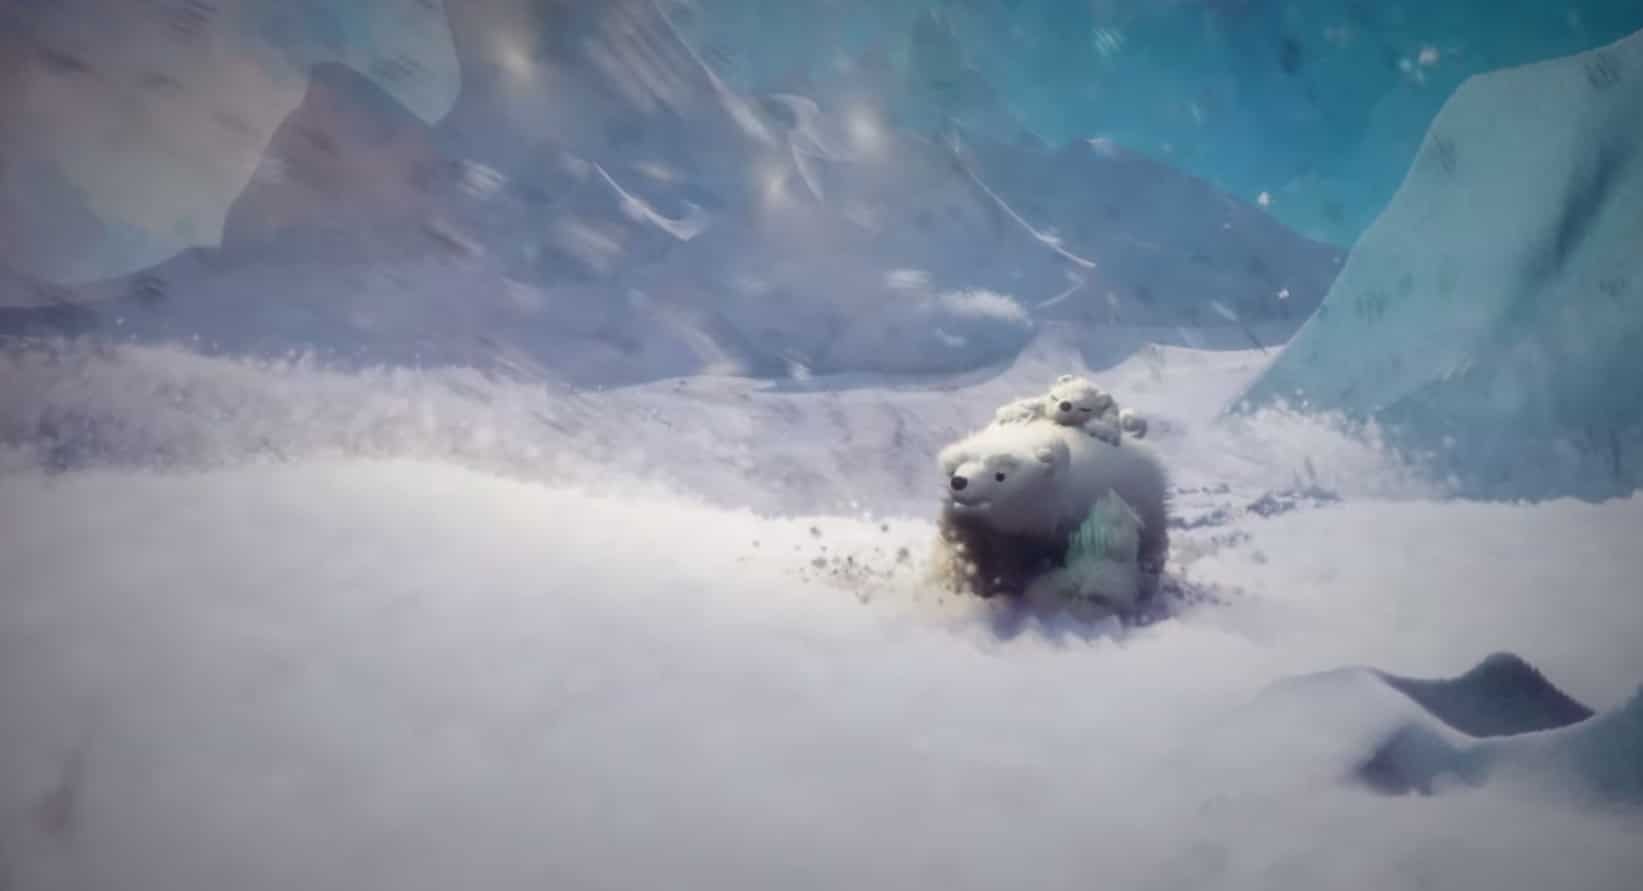 Dreams PS4 Polar Bears Baby Cub Gameplay Screenshot